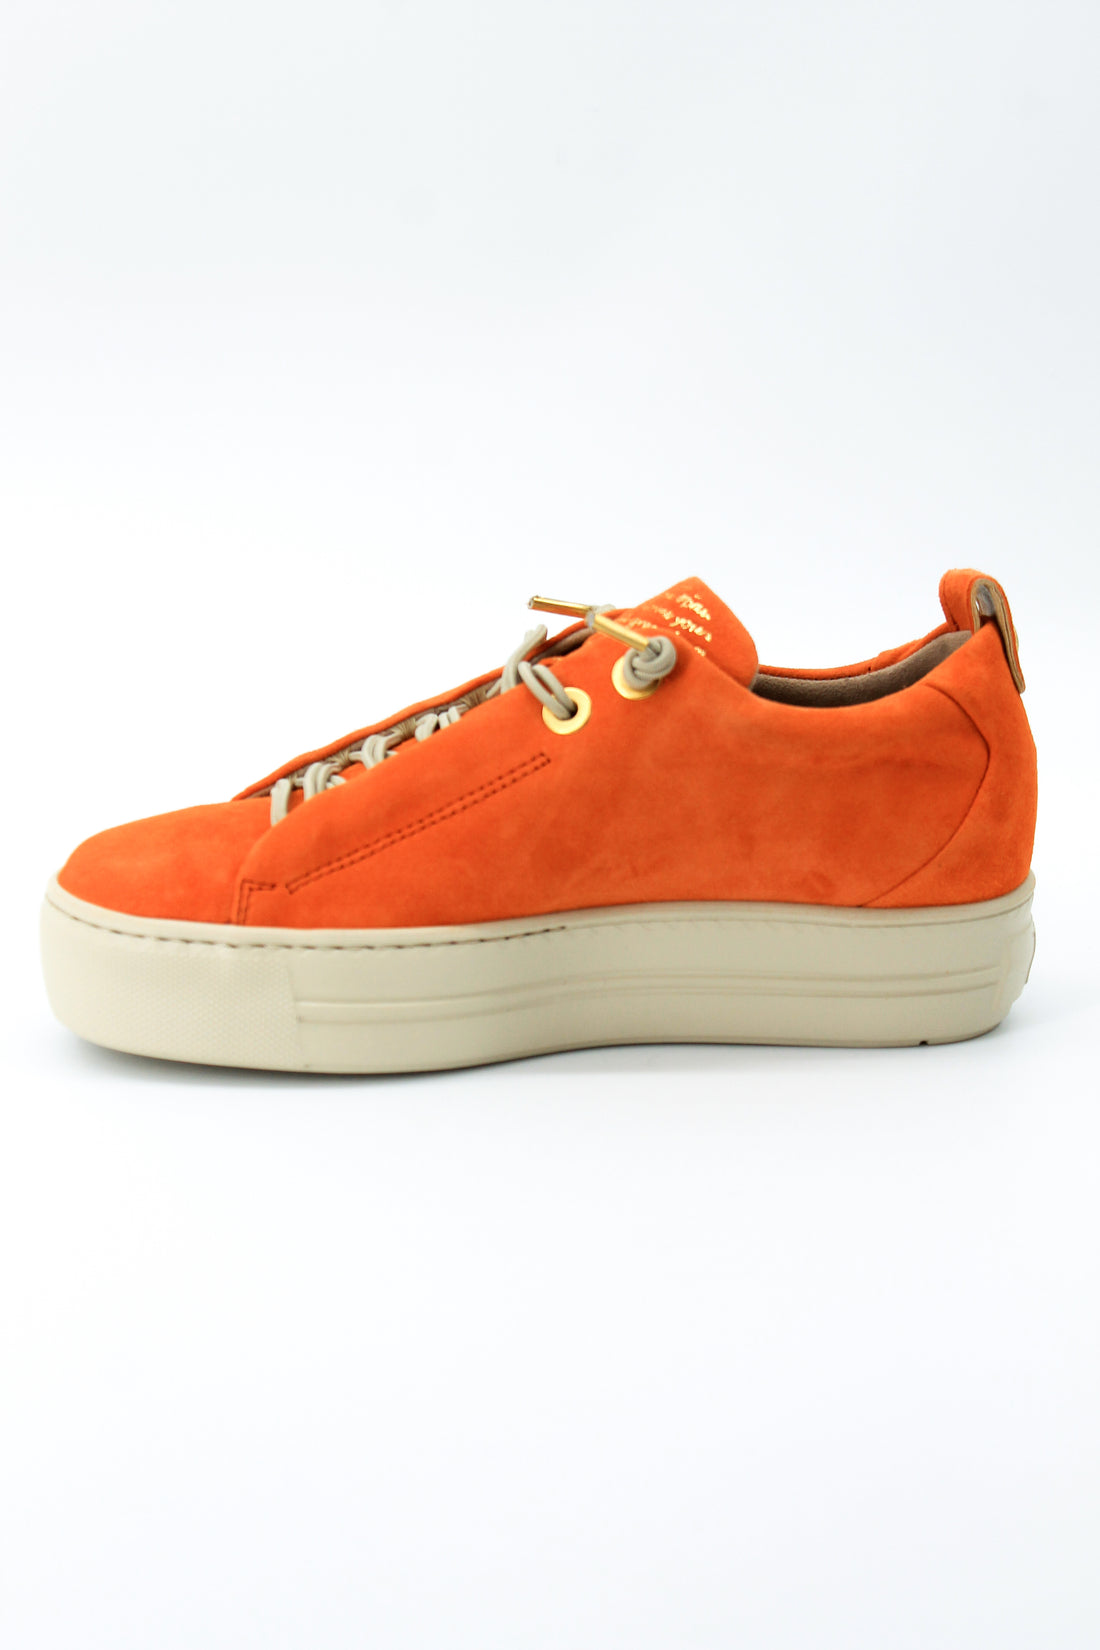 Paul Green 5017 Orange